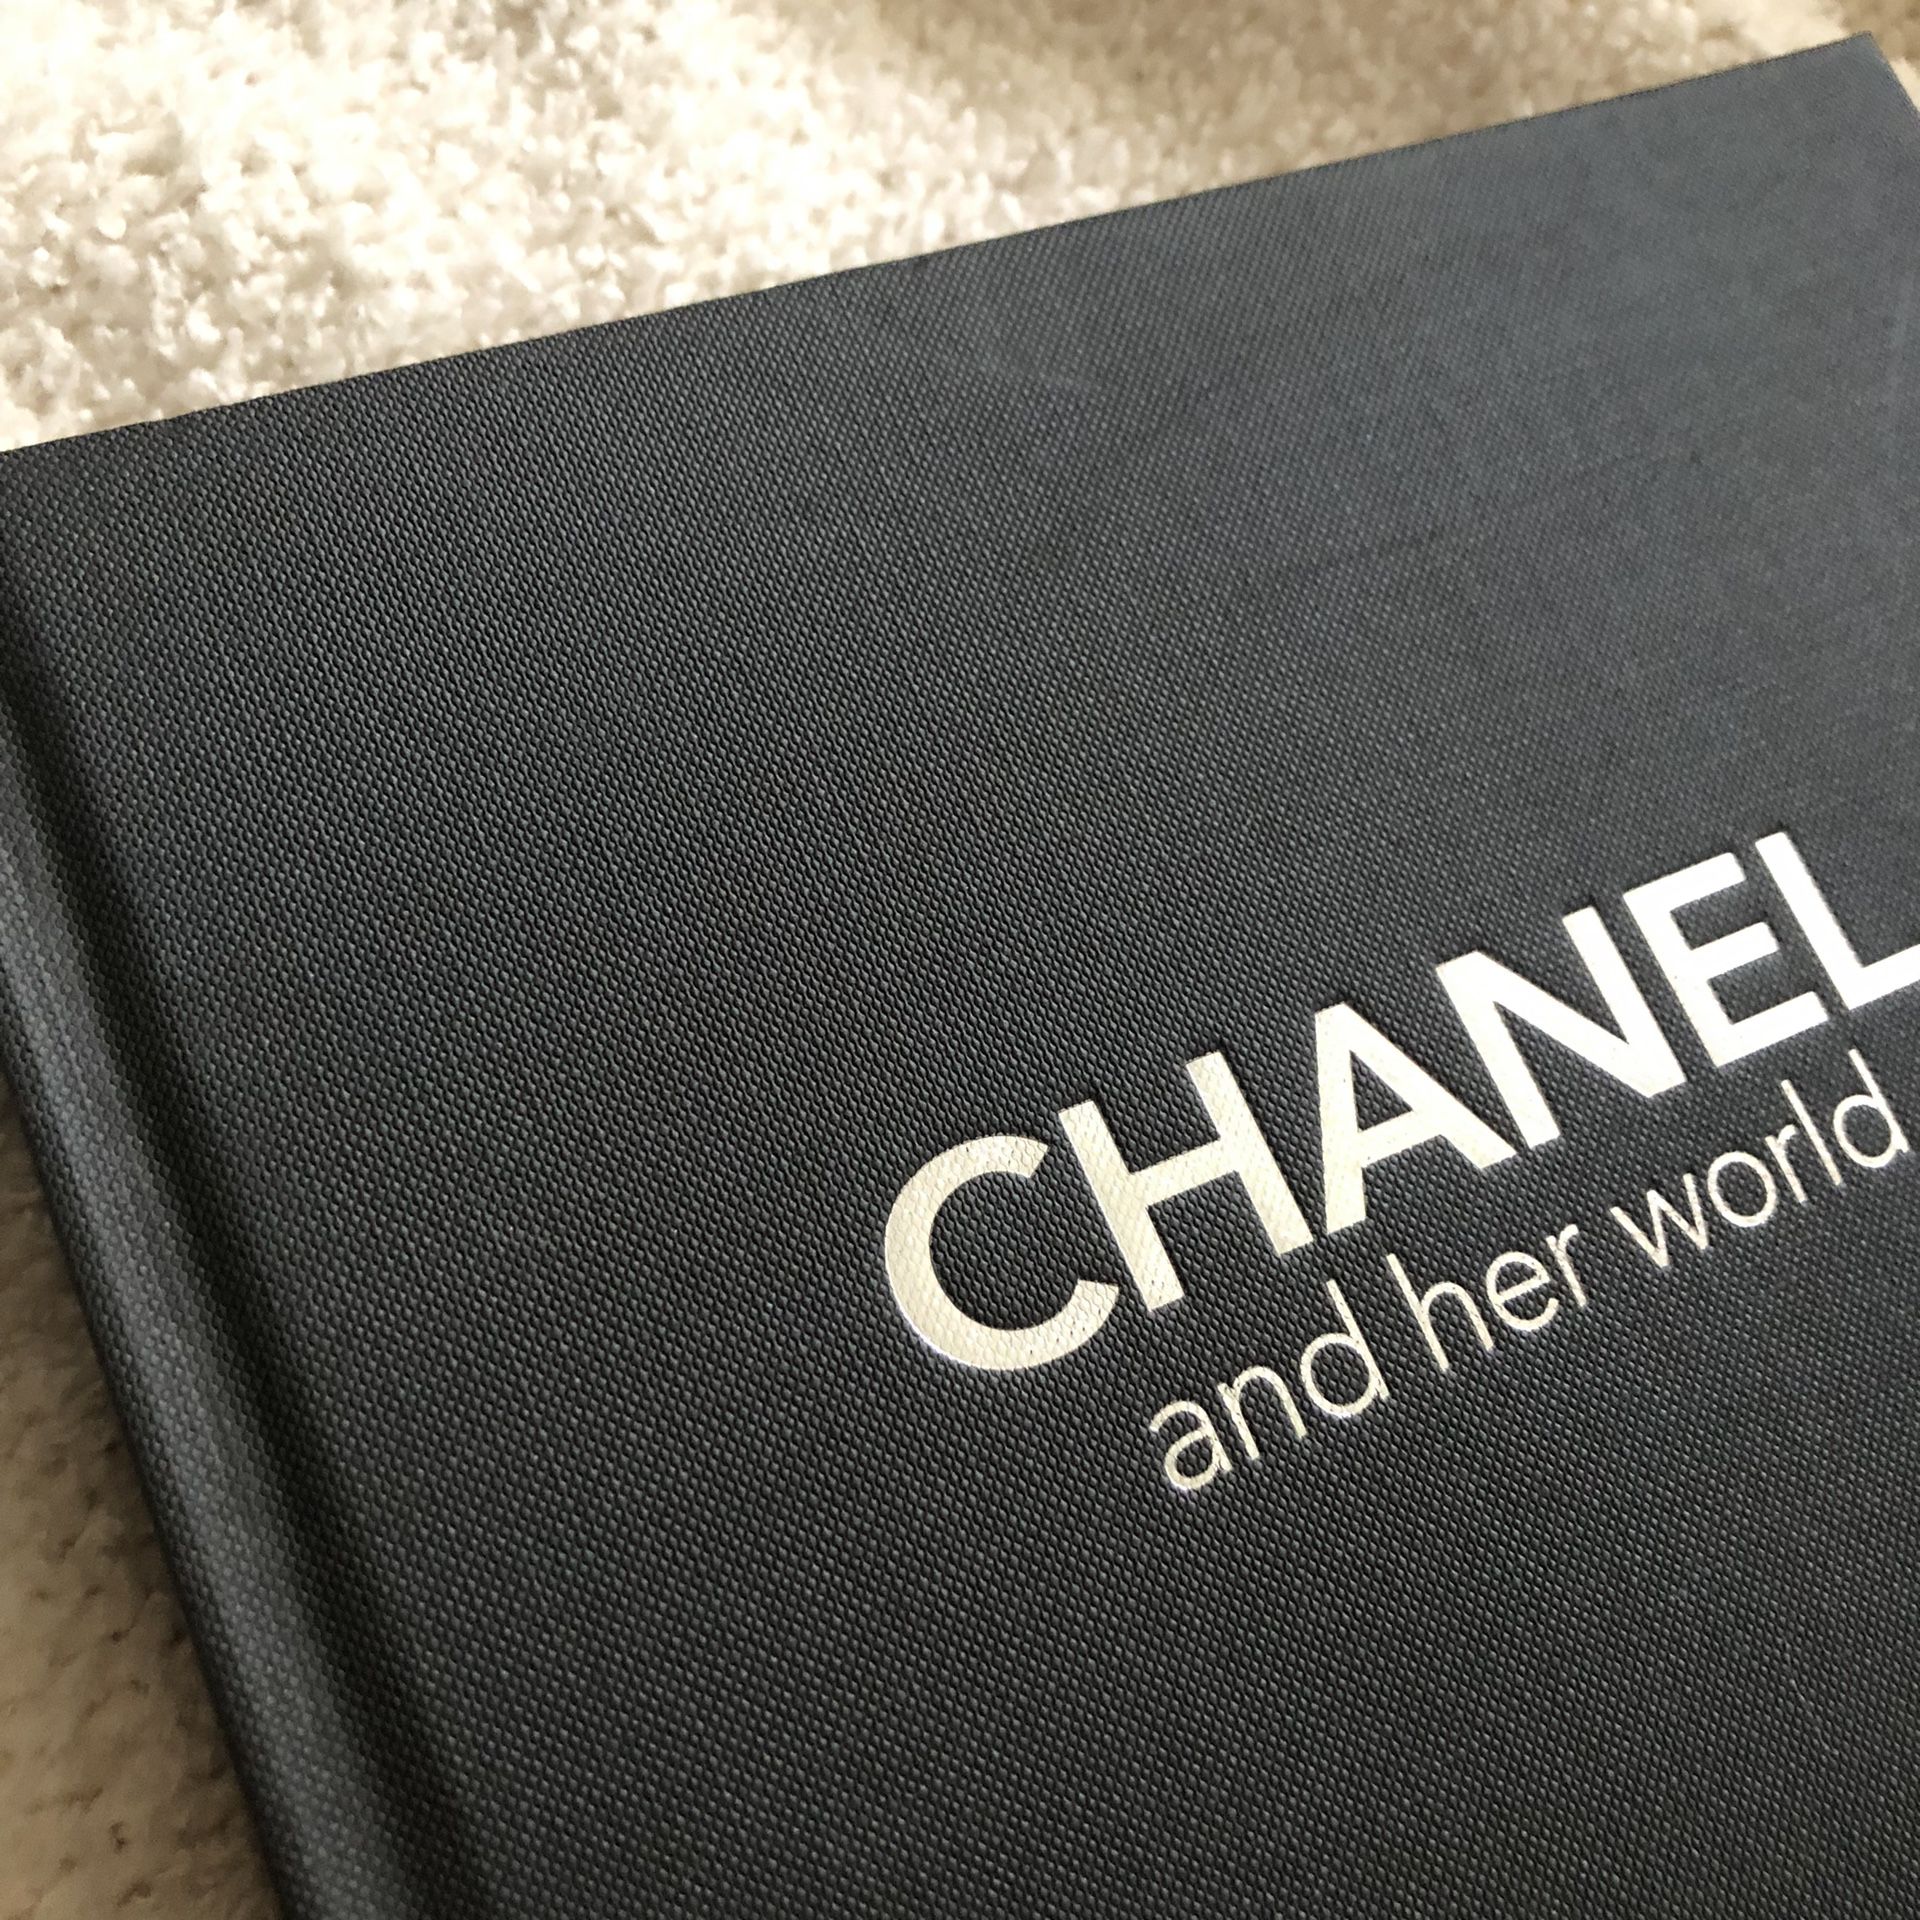 Chanel Cat Walk Book for Sale in Fullerton, CA - OfferUp